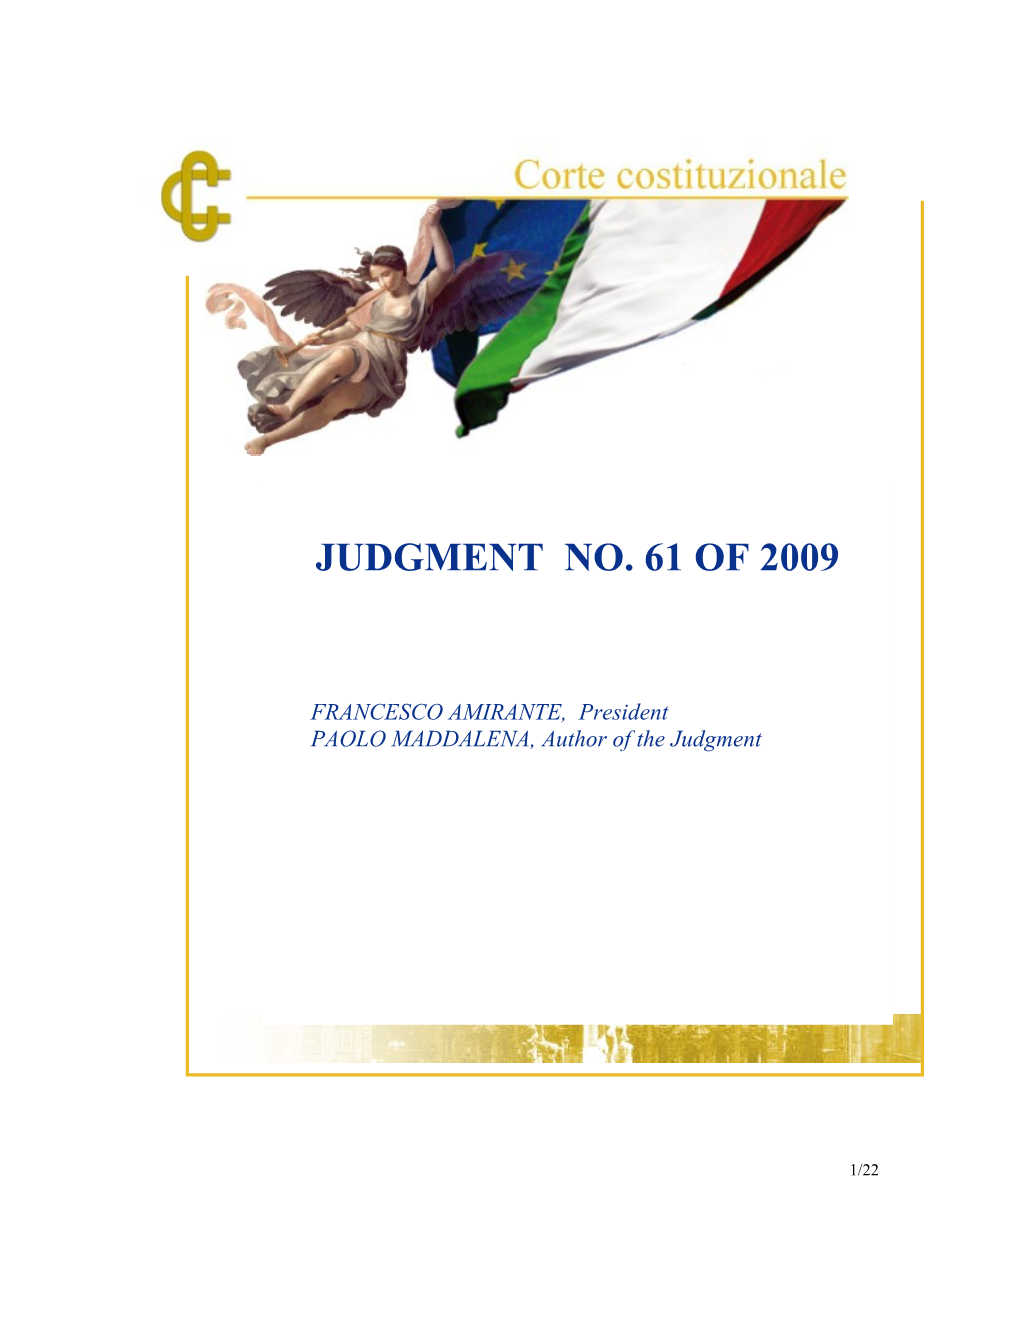 Judgment No. 61 Year 2009